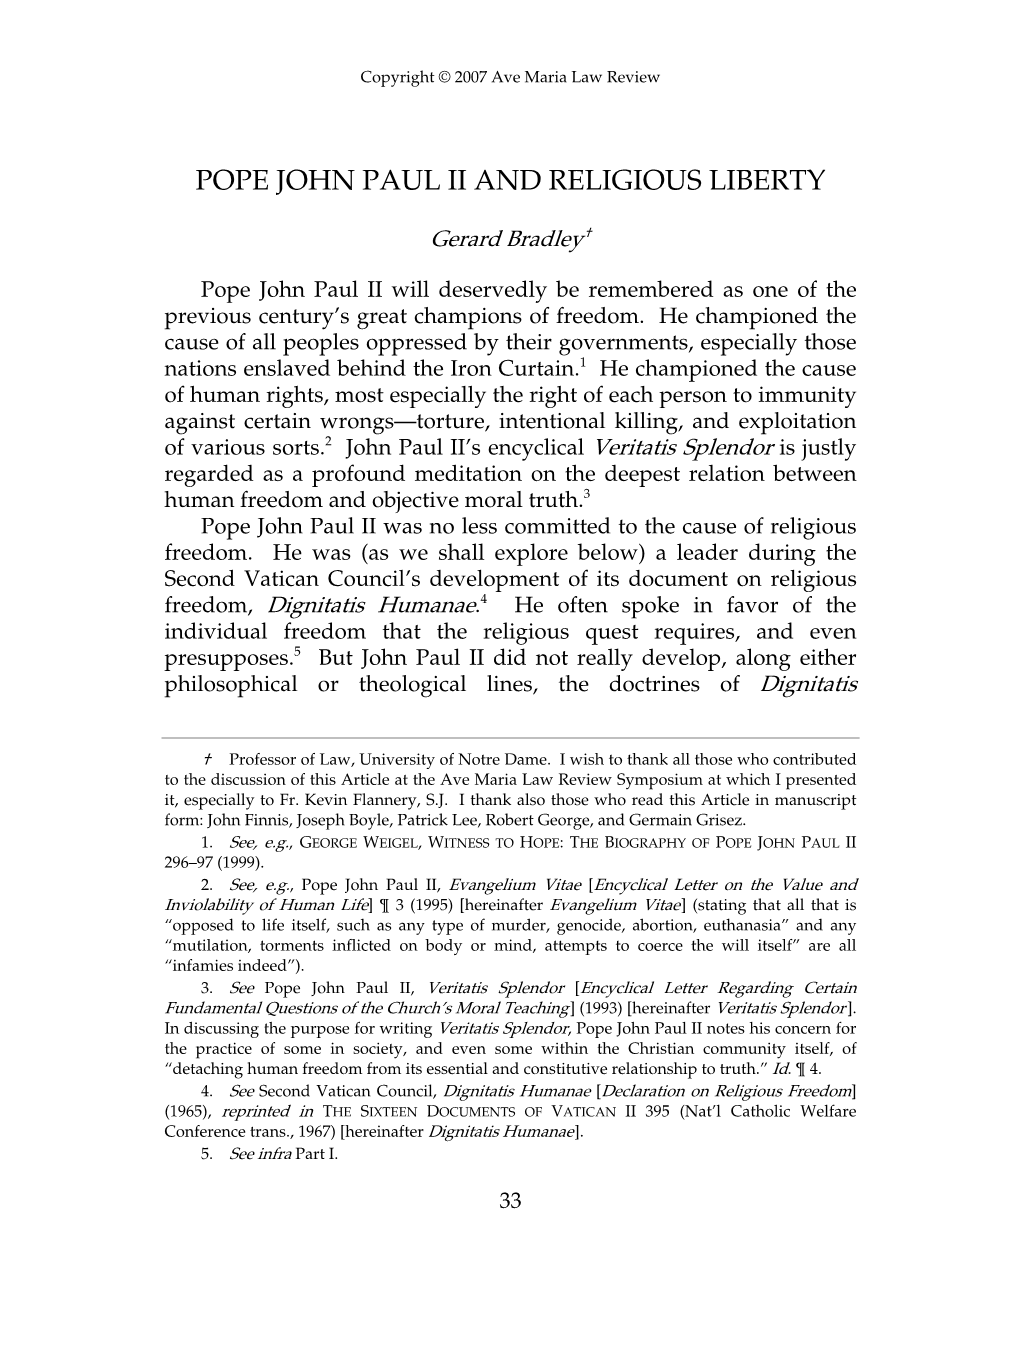 Pope John Paul Ii and Religious Liberty